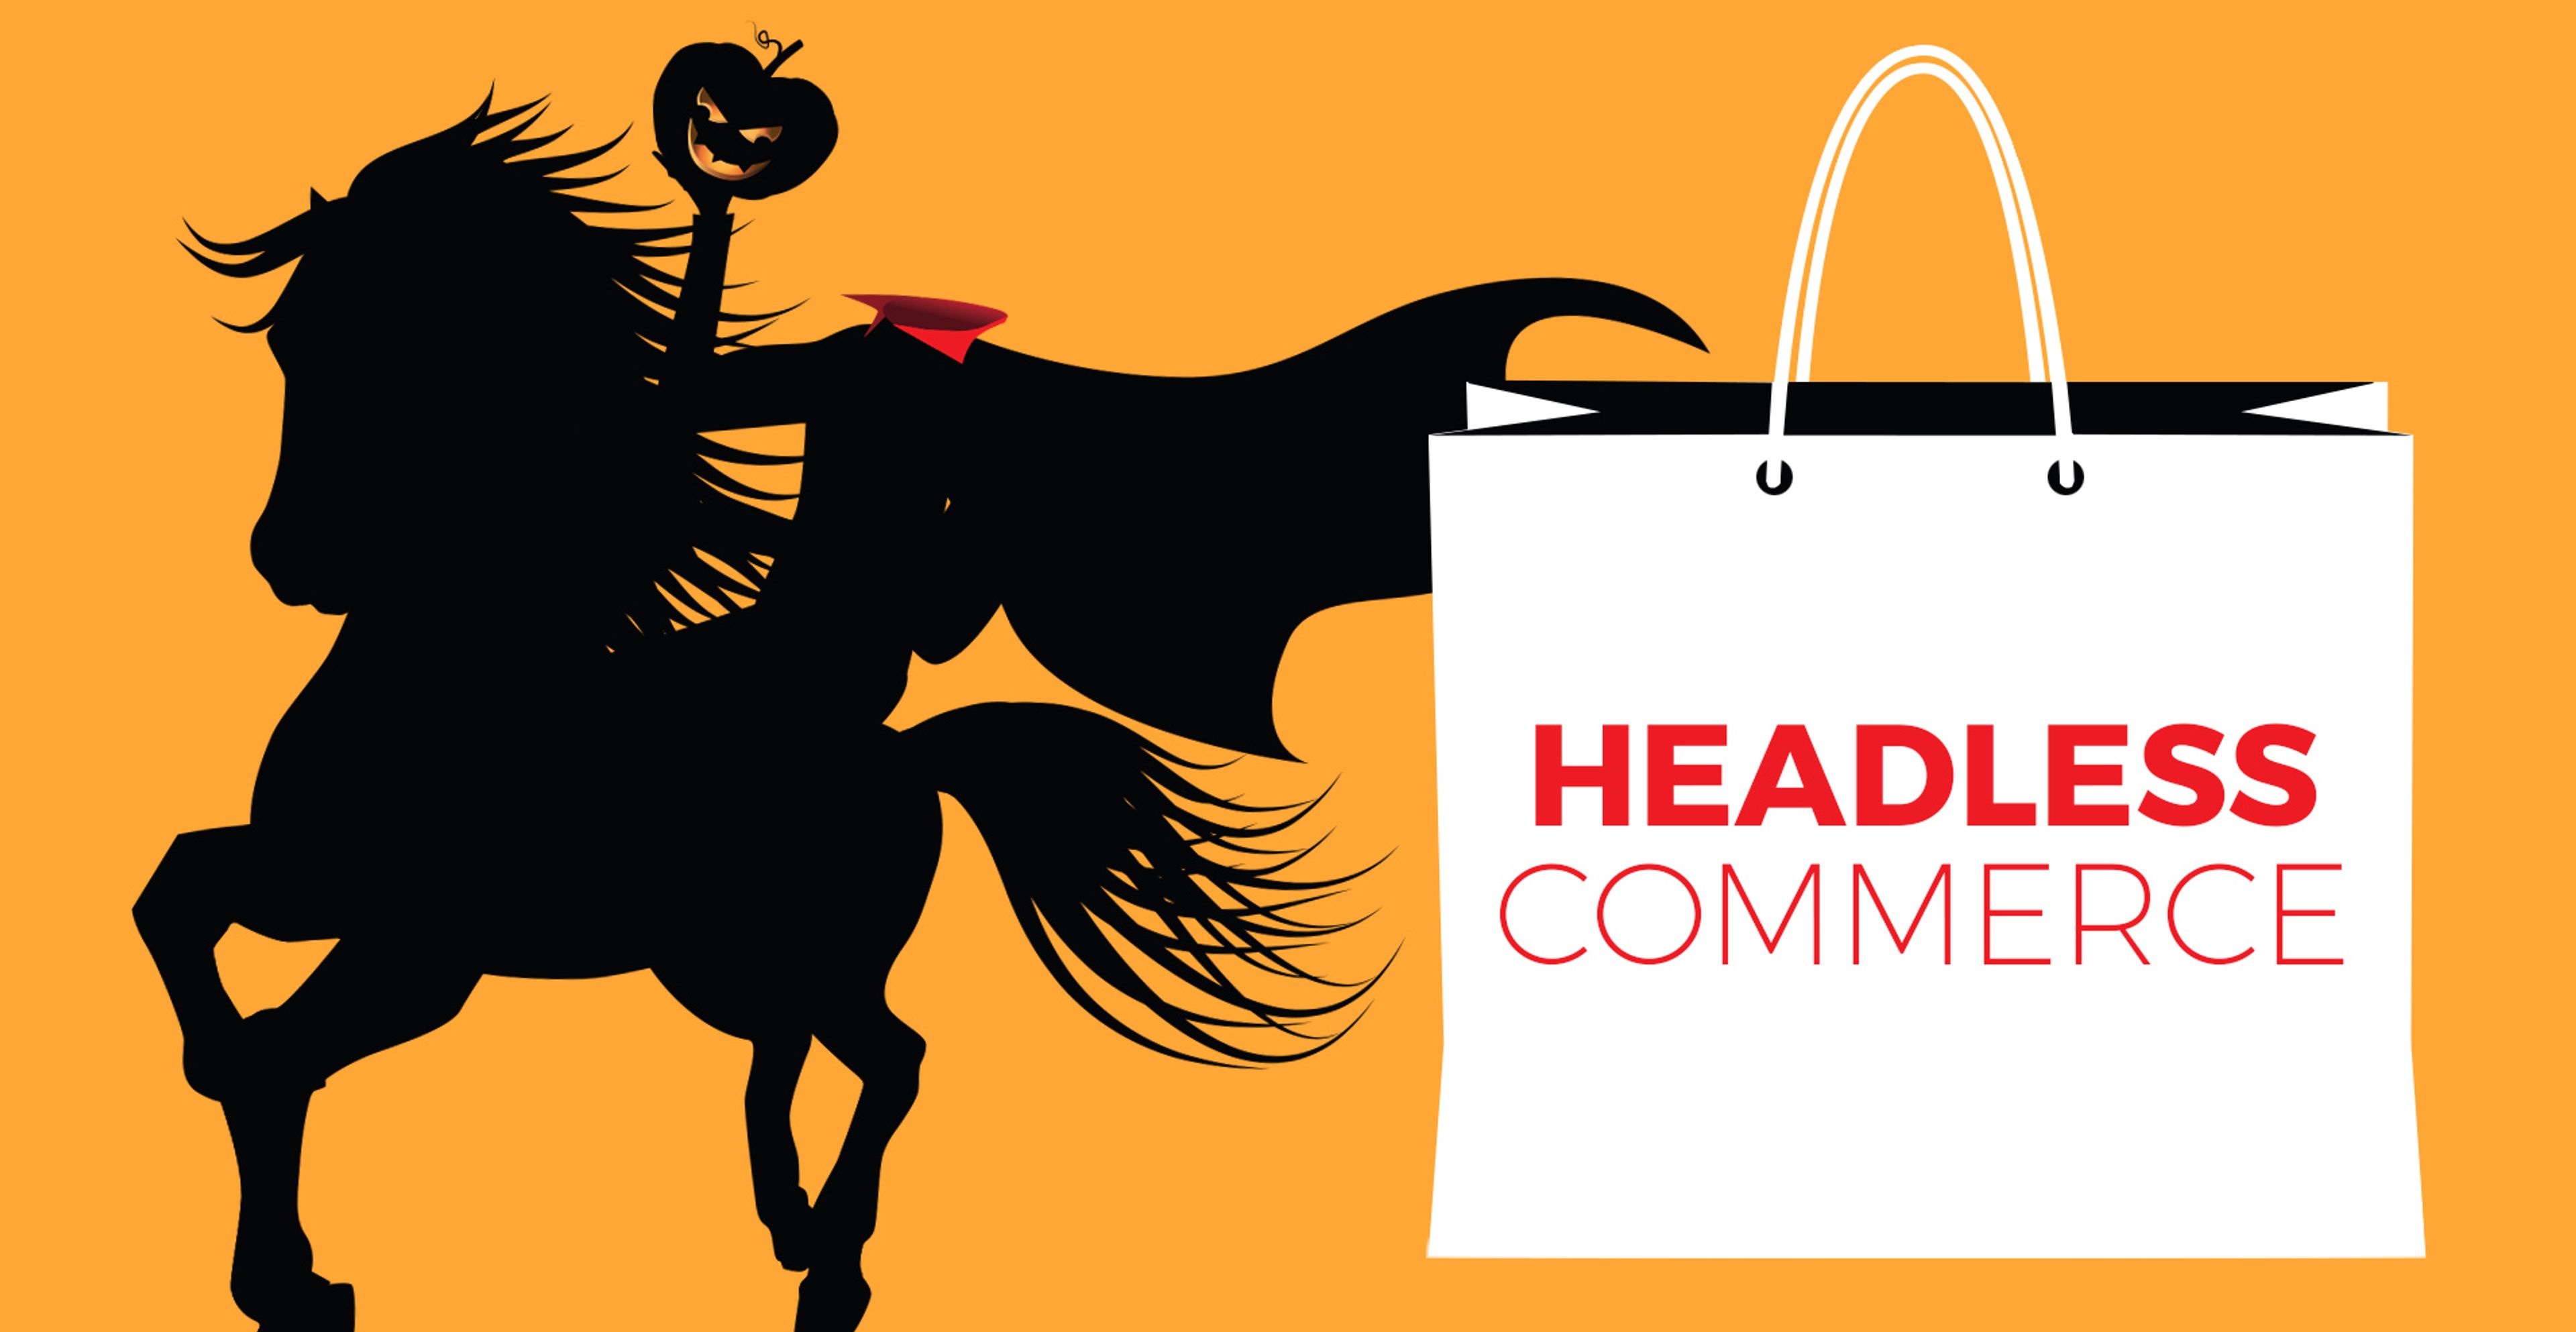 Headless commerce image of headless horseman and shopping bag